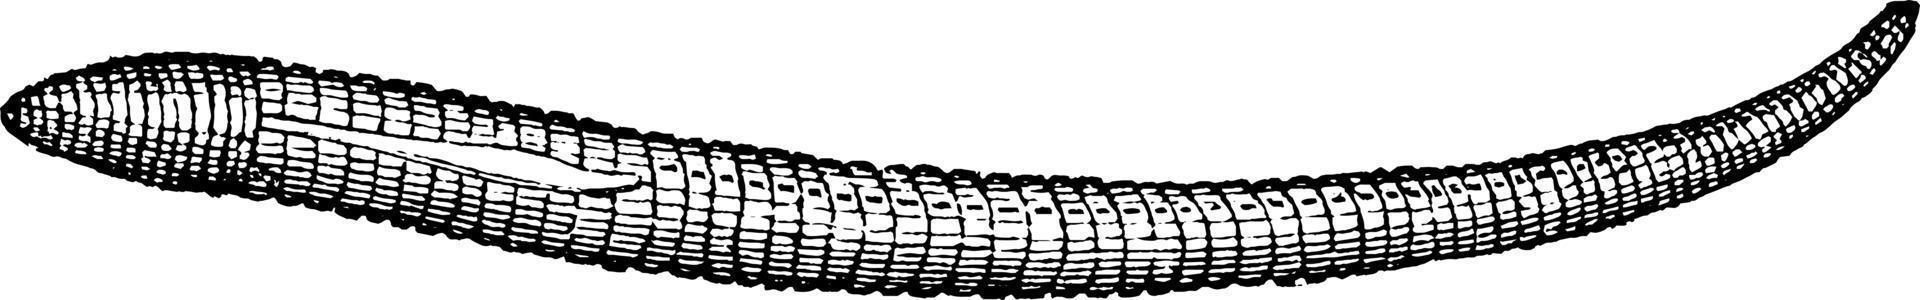 Earthworm, vintage illustration. vector